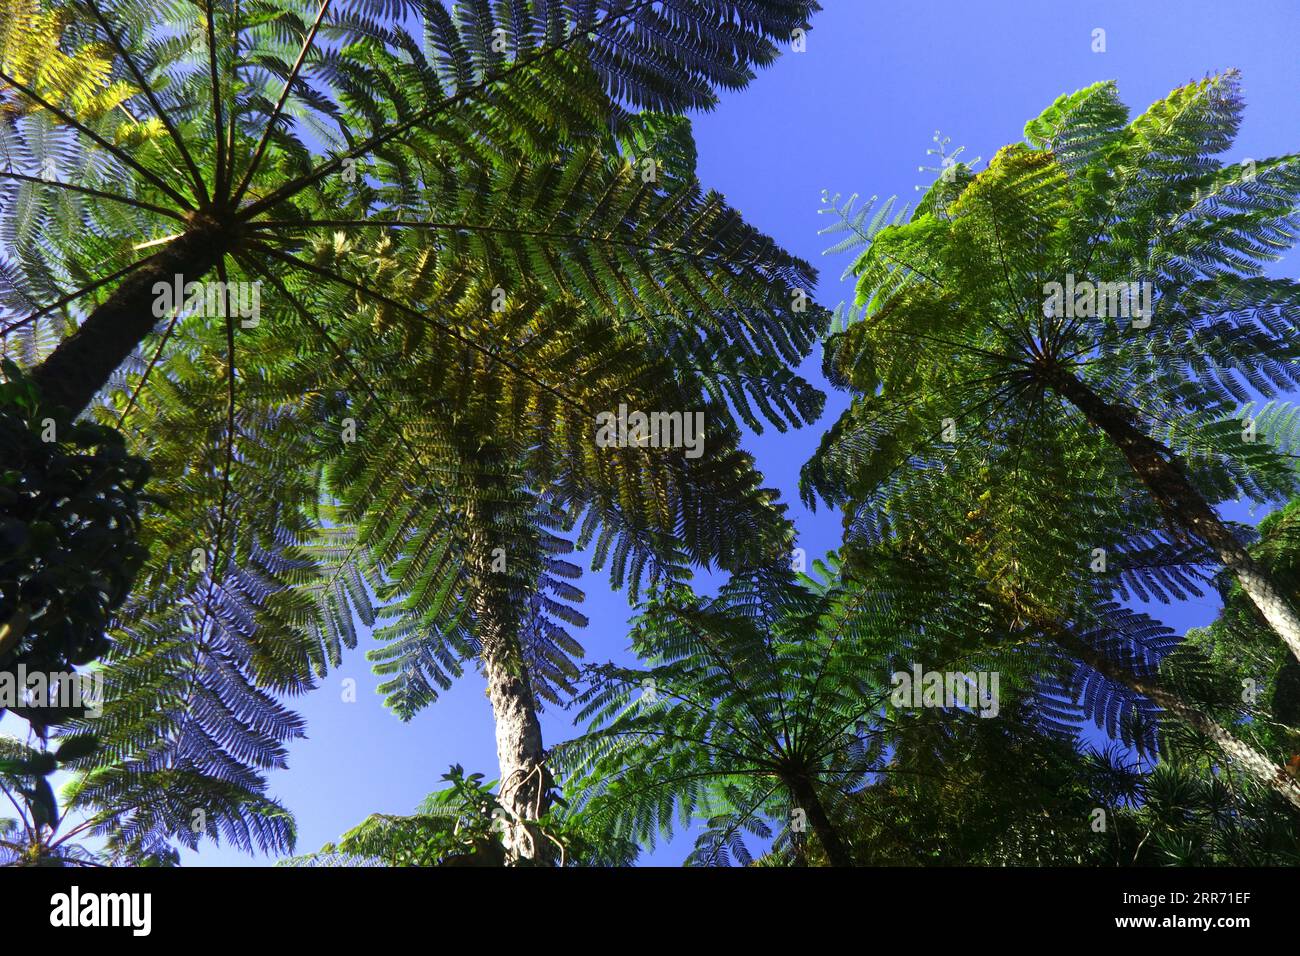 Tree ferns against blue sky, Atherton Tableland, near Cairns, Queensland, Australia Stock Photo